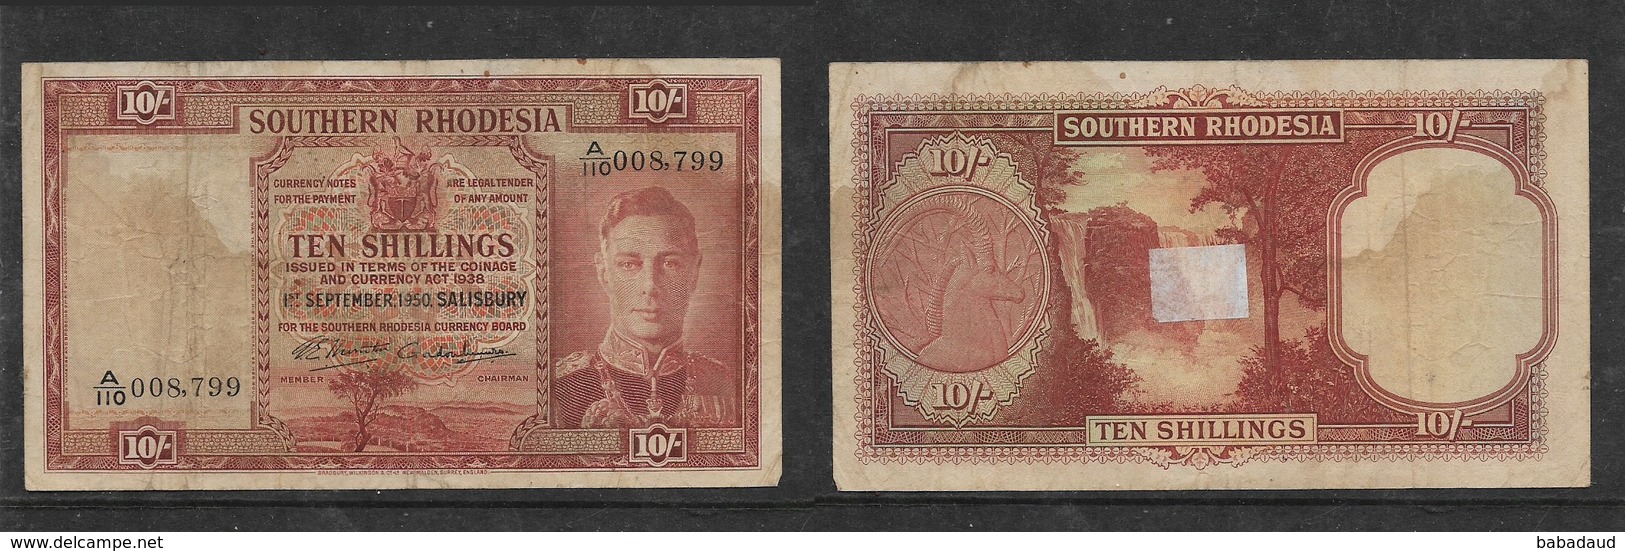 Southern Rhodesia, GVIR, 1950, 10/- Banknote - Rhodesia